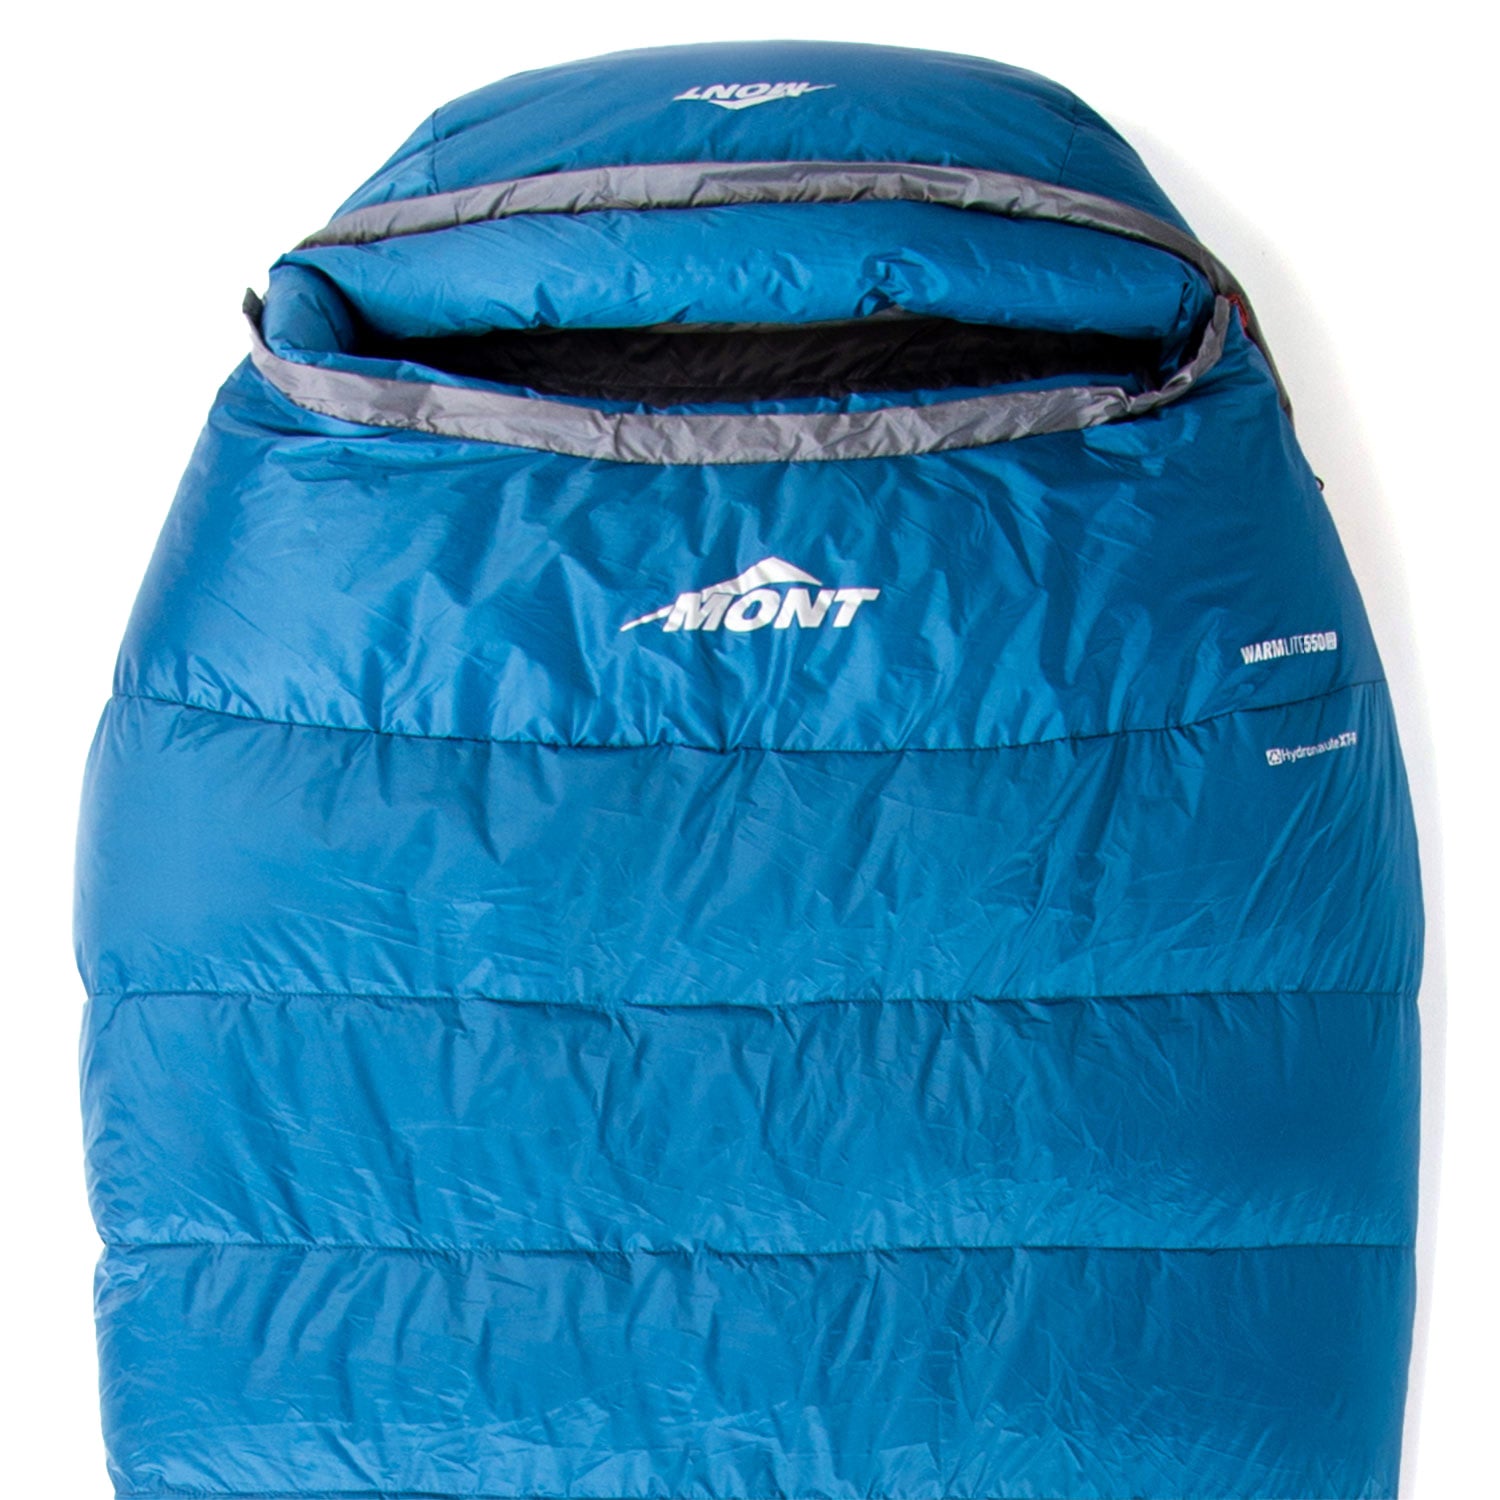 Warmlite XT-R 750 -7 to -12°C Down Sleeping Bag